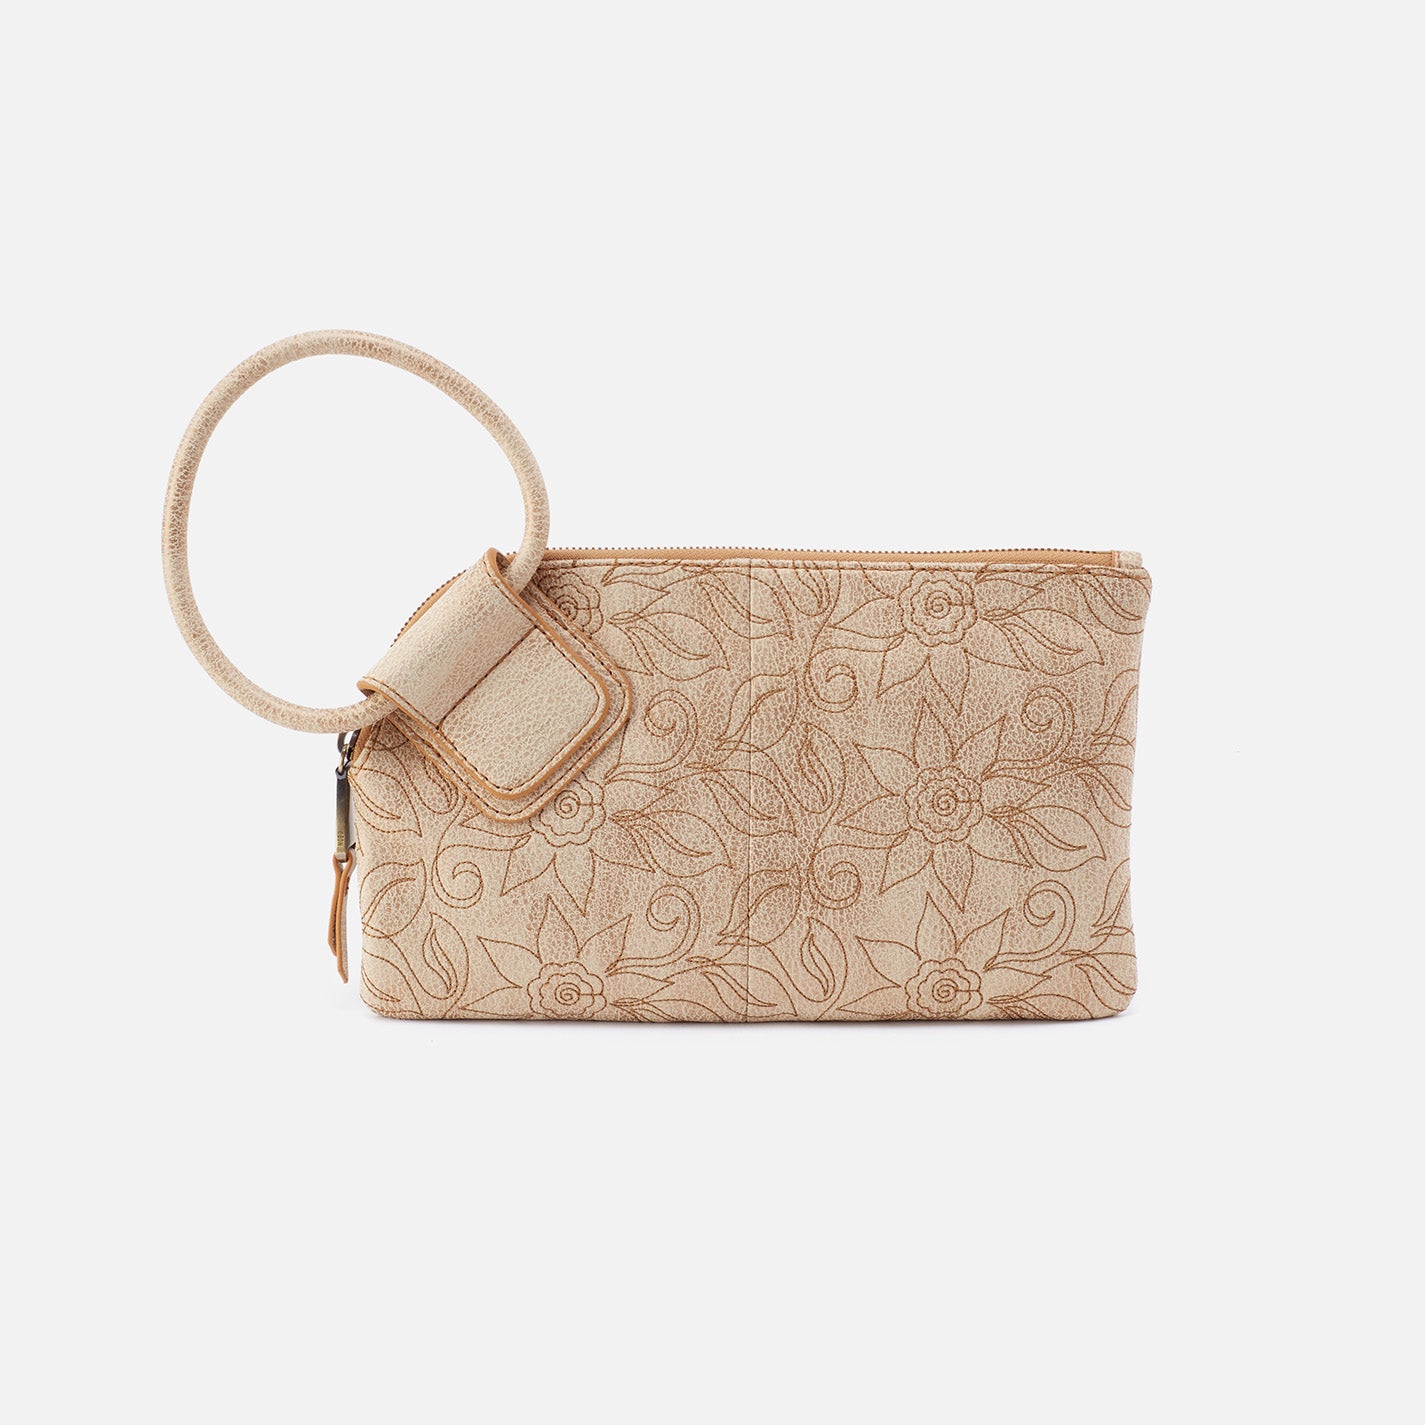 Chanel - Metallic Gold Lambskin Double Pocket Shoulder Bag